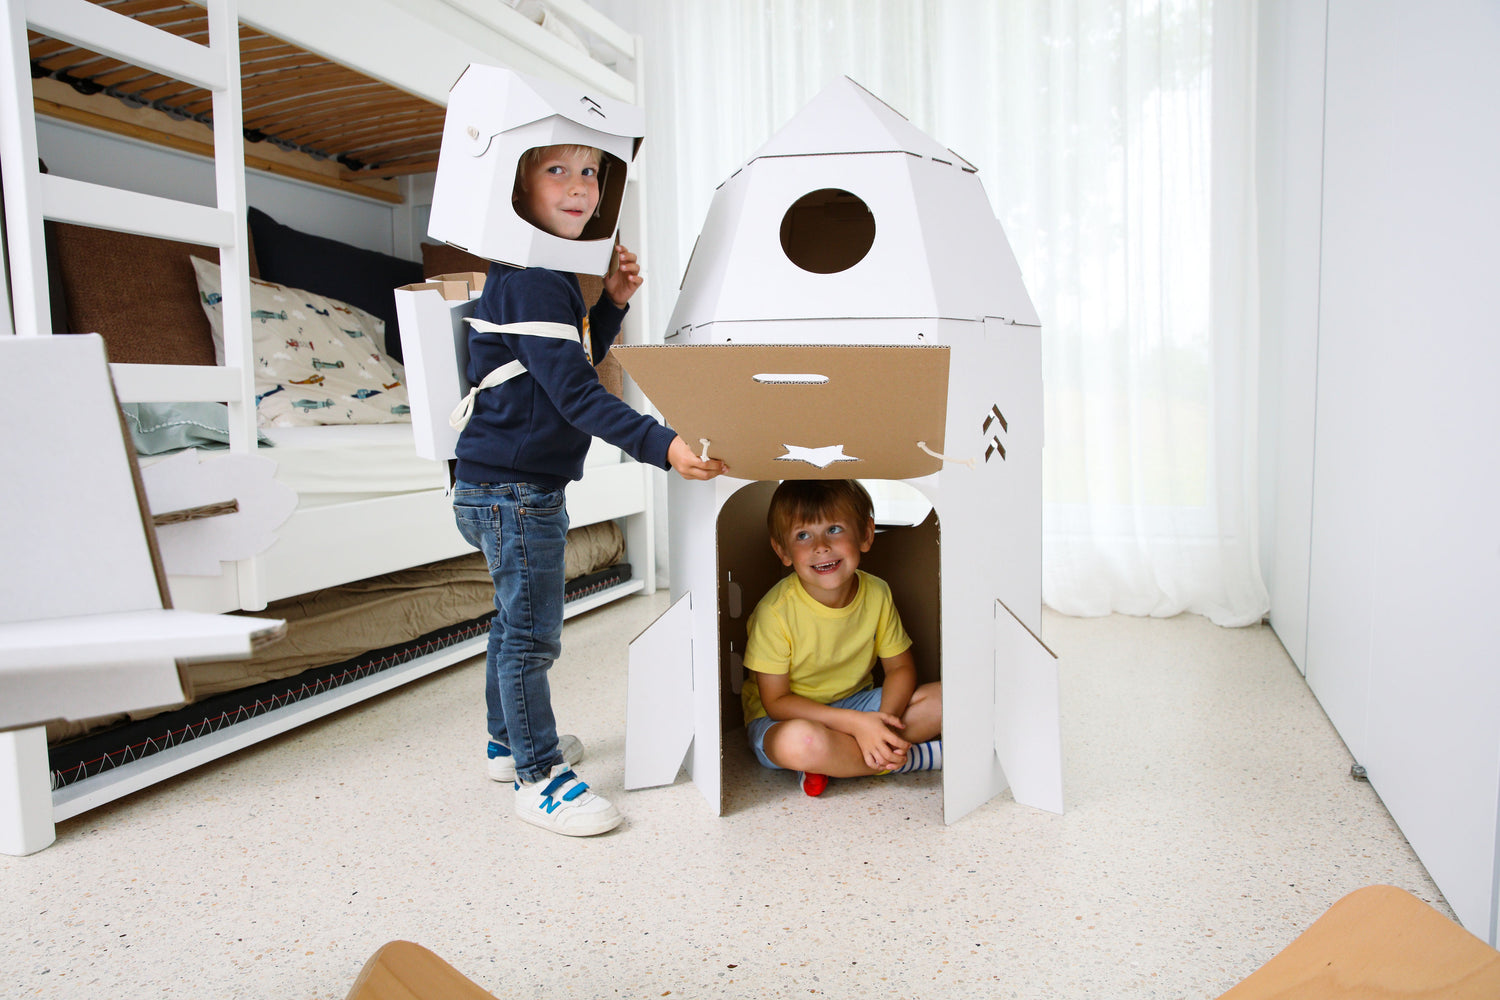 Astronaut rocketship playhouse cardboard